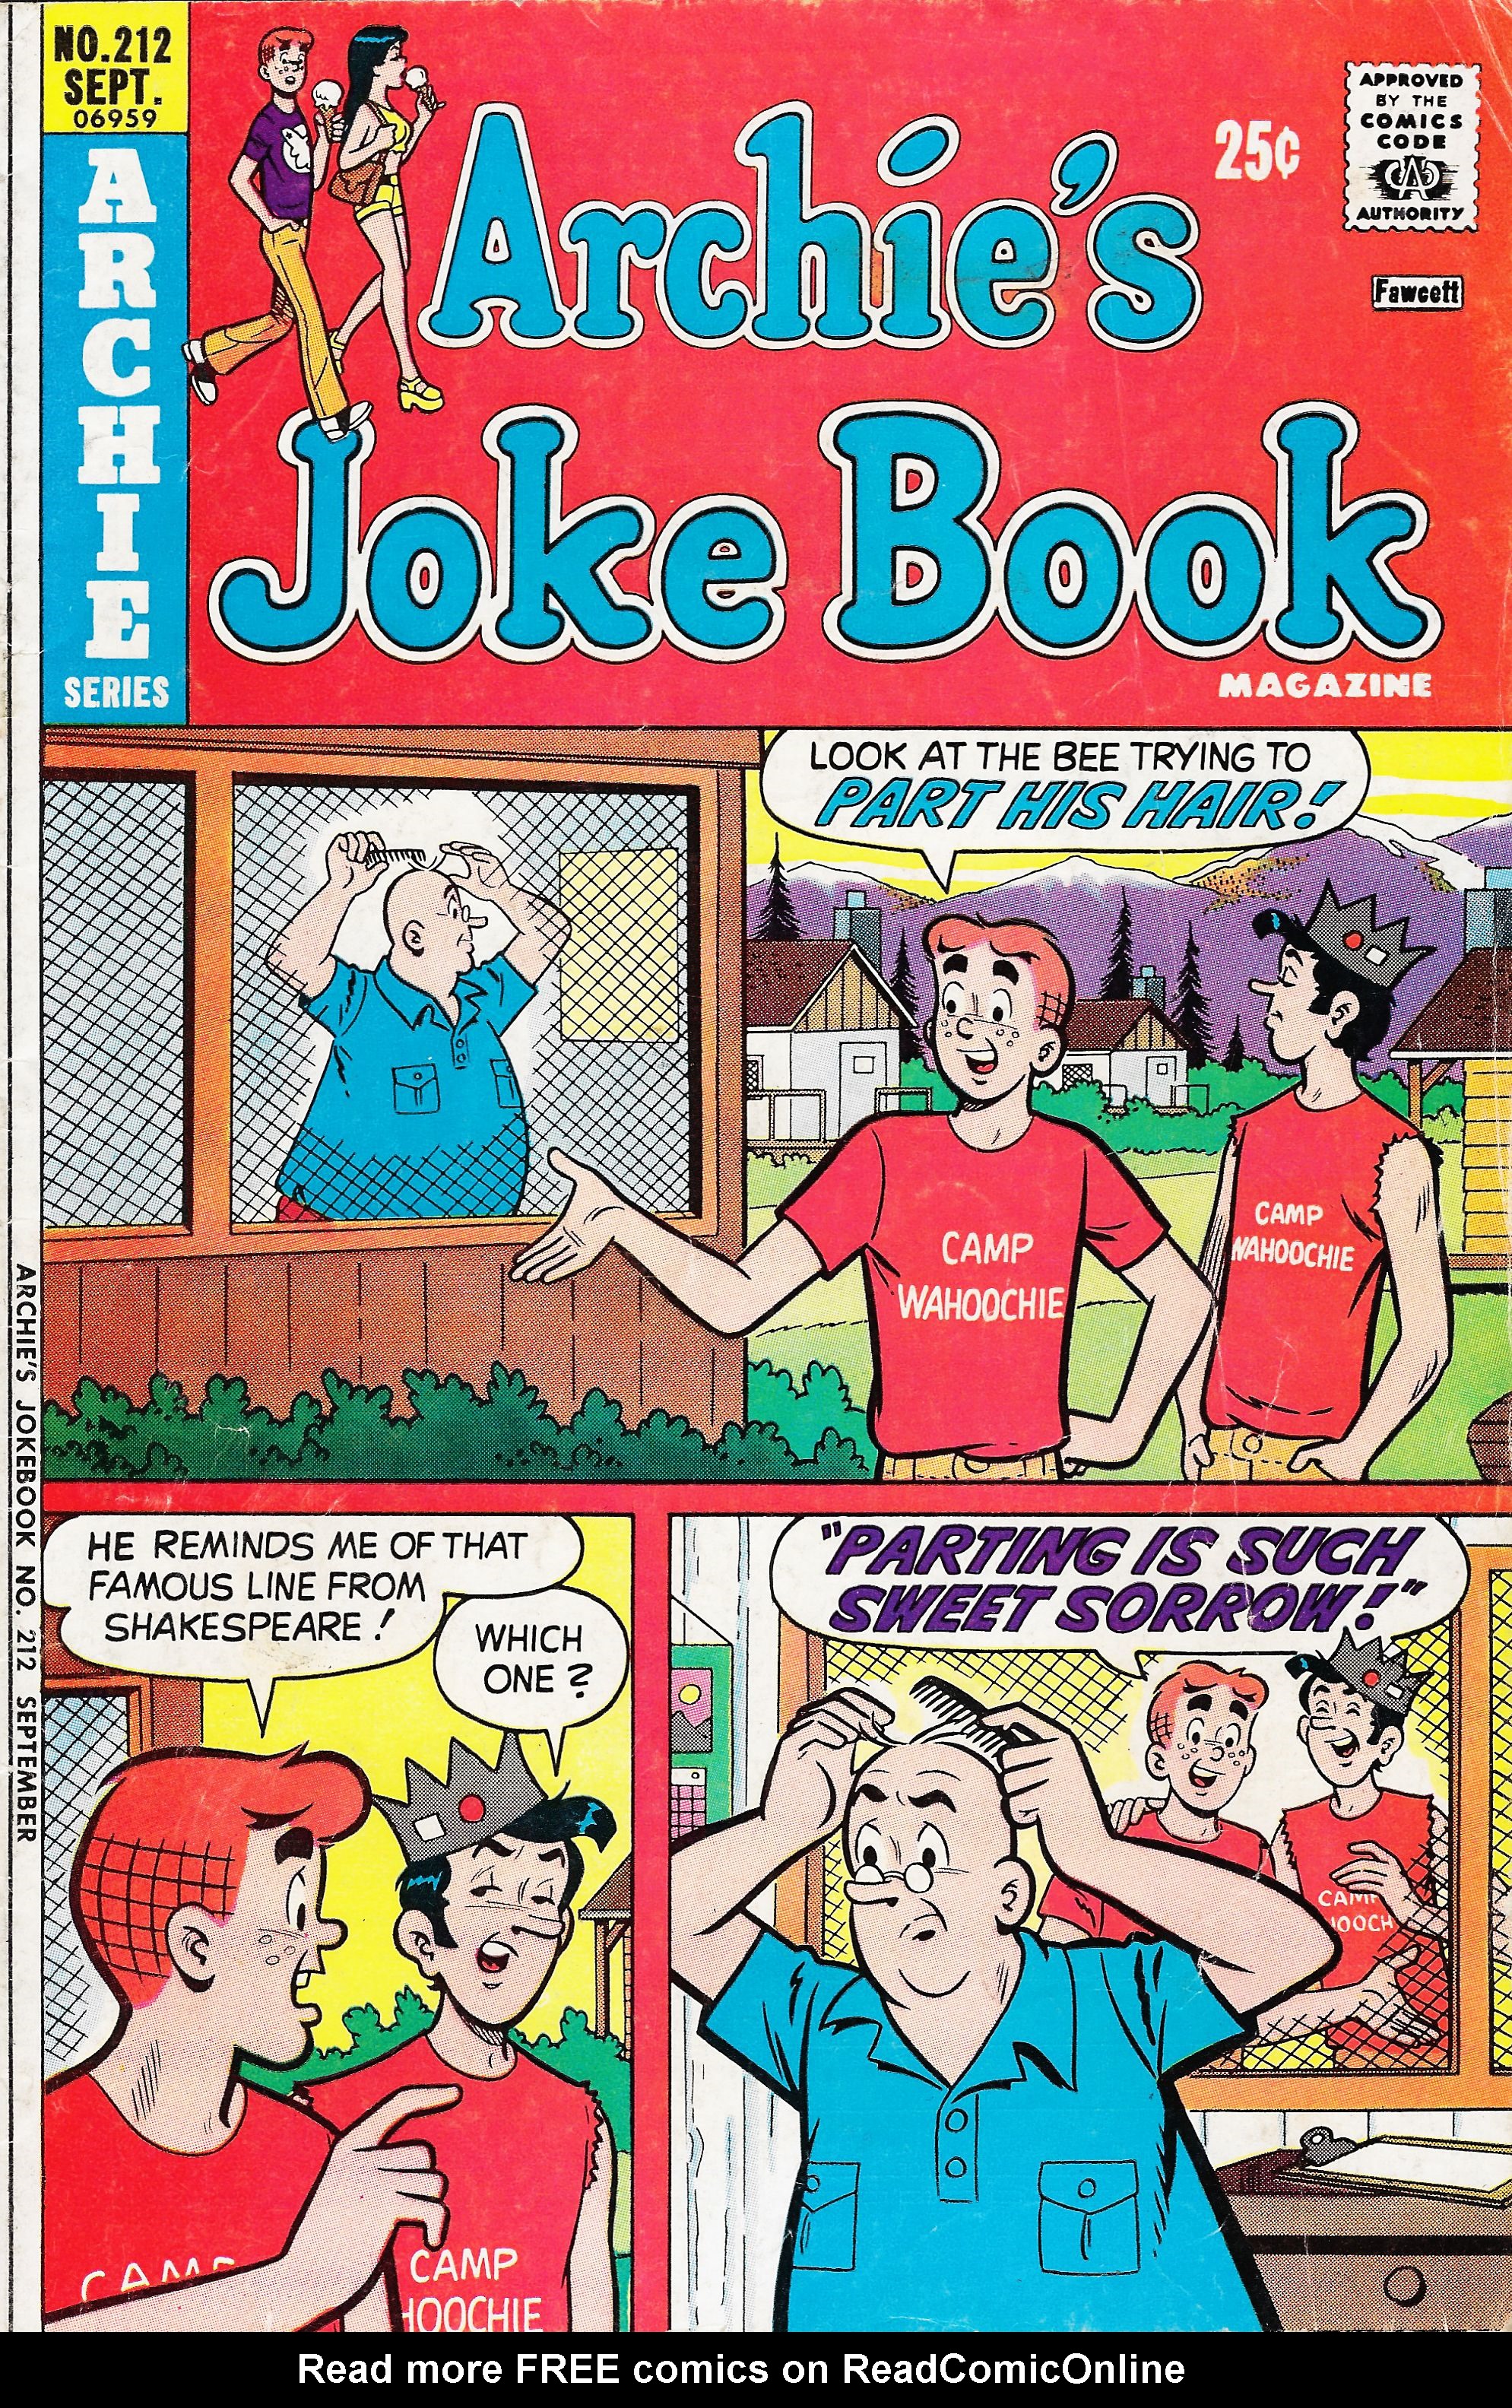 Read online Archie's Joke Book Magazine comic -  Issue #212 - 1